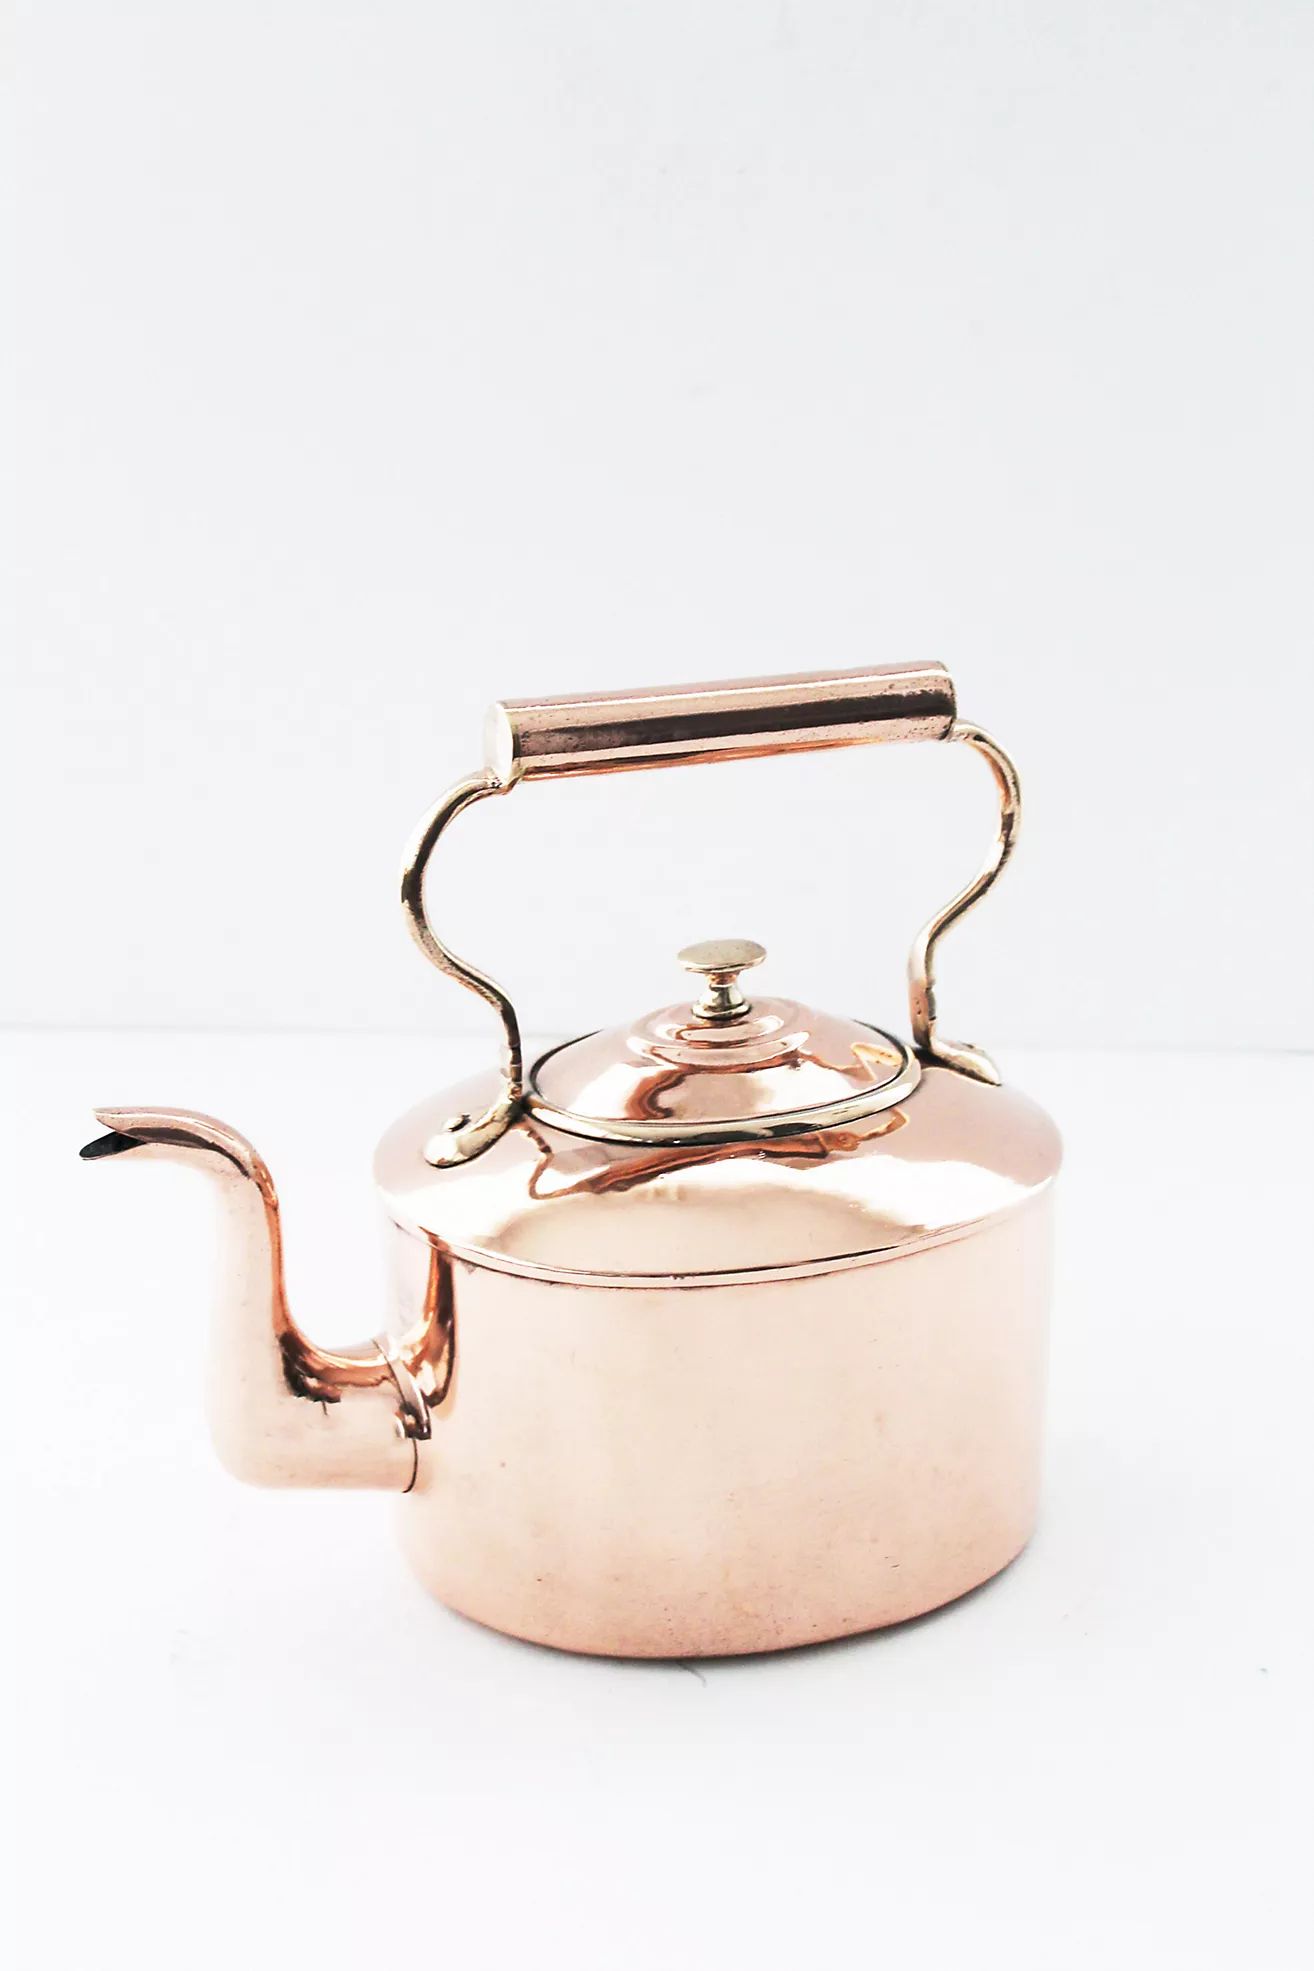 Coppermill Kitchen Vintage English Oval Tea Kettle, C.1880 | Anthropologie (US)